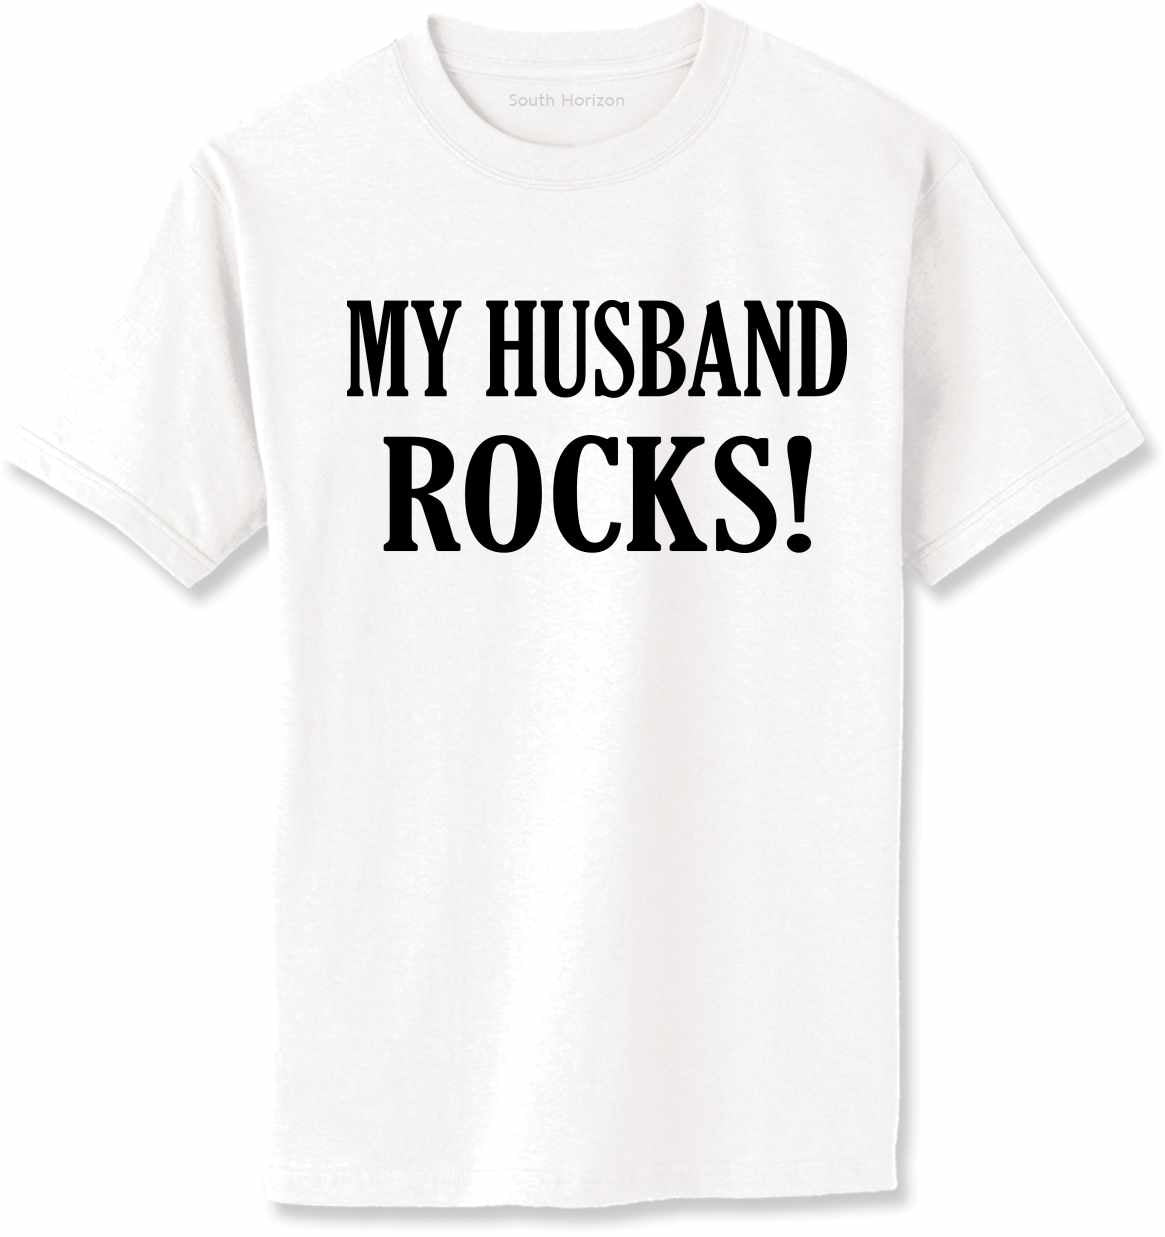 MY HUSBAND ROCKS! Adult T-Shirt (#724-1)